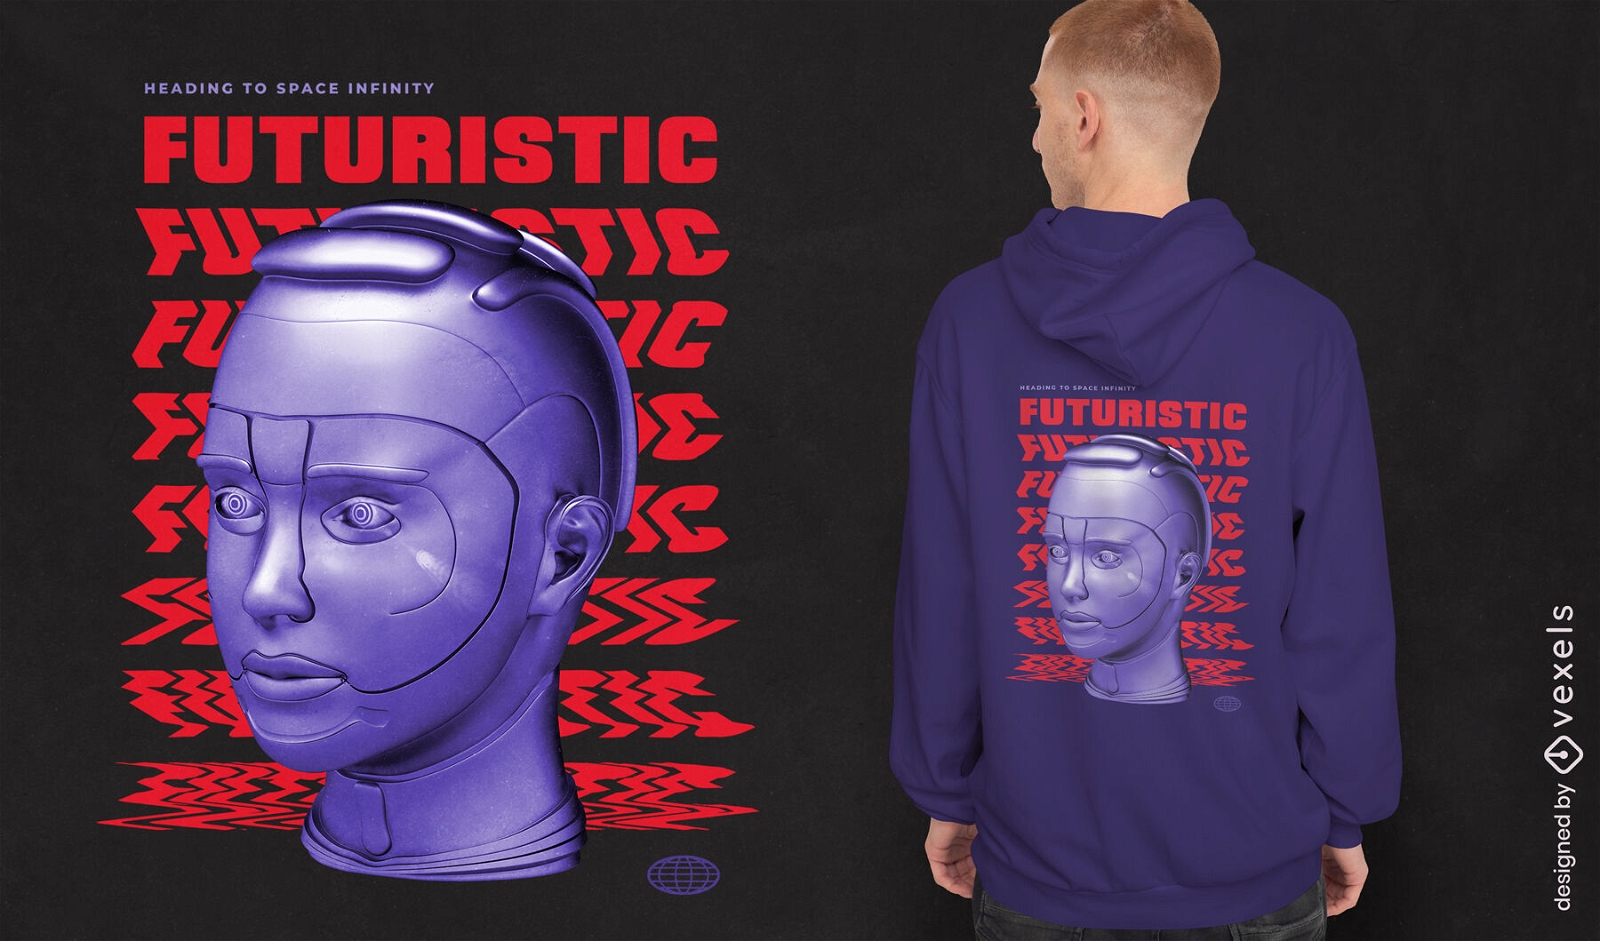 Futuristic robot head t-shirt design